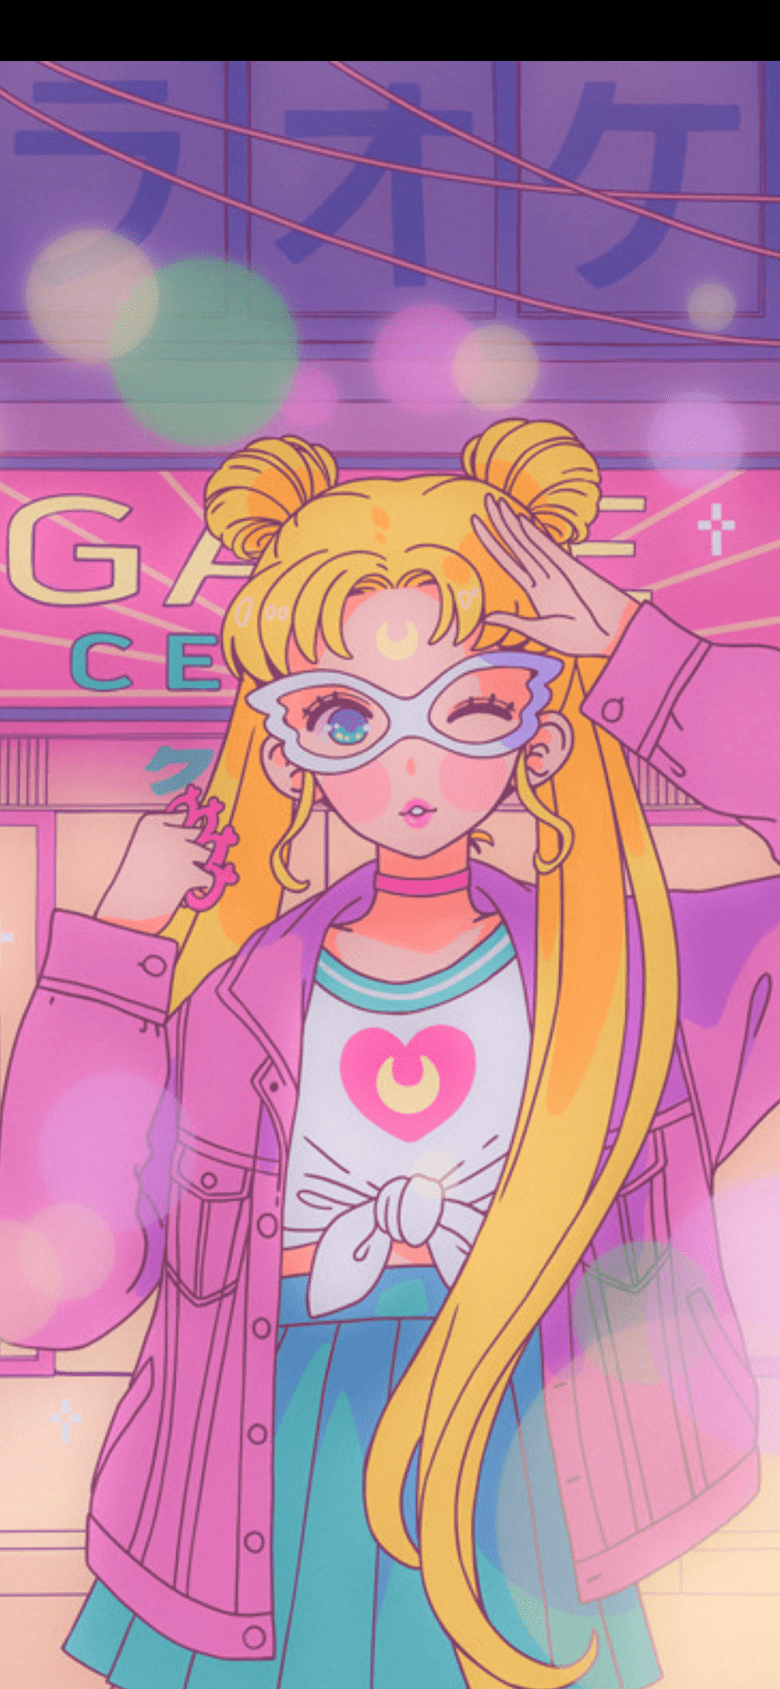 Sailor moon in a pink city with a heart - Arcade, Sailor Moon